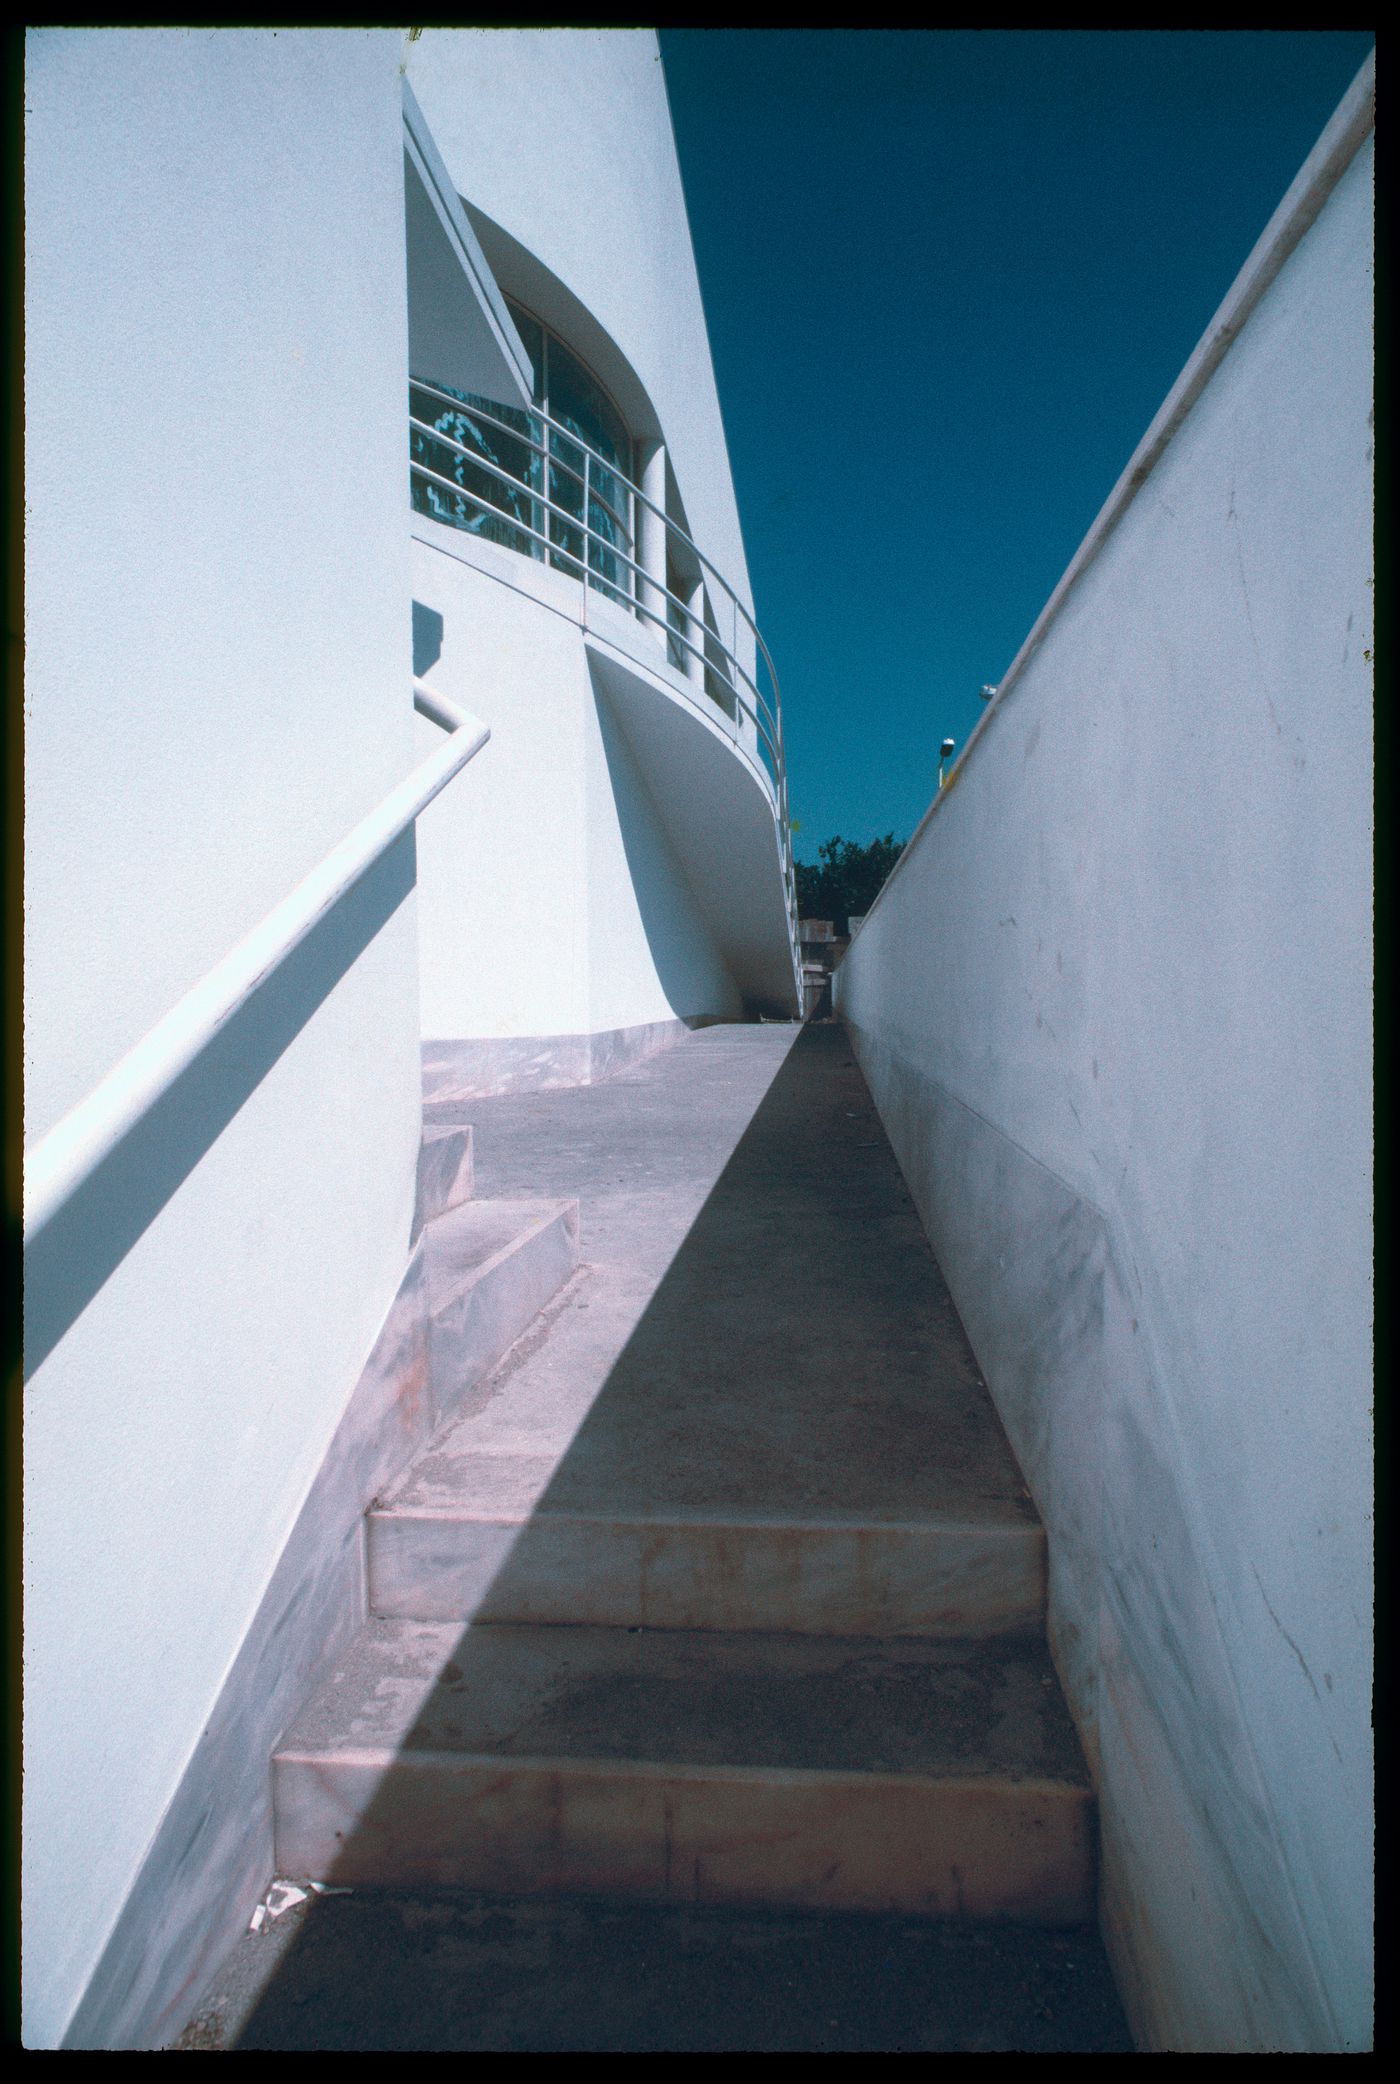 View of exterior staircase of Banco Borges & Irmão II [Borges & Irmão bank II], Vila do Conde, Portugal